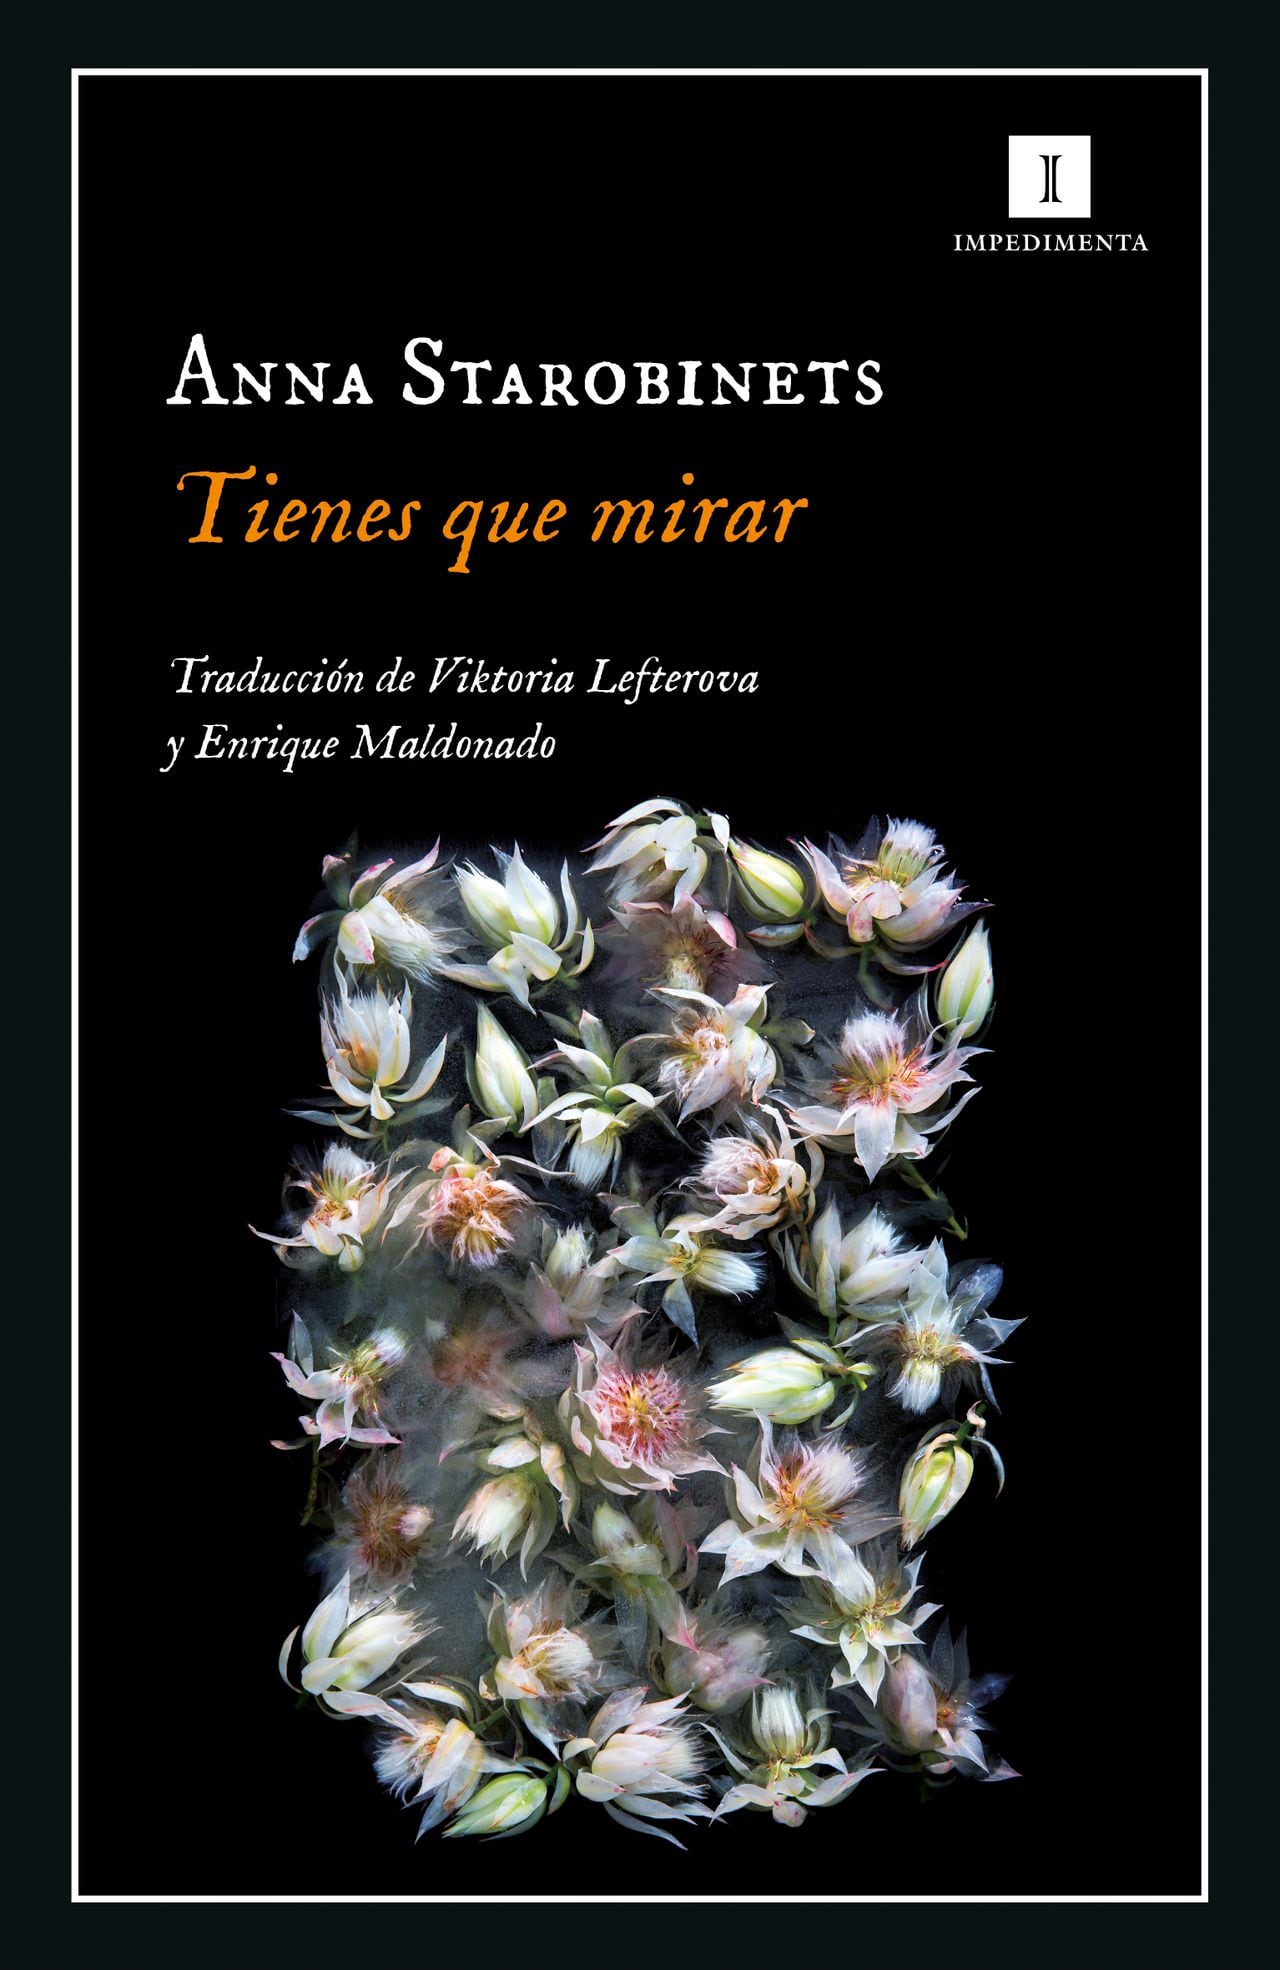 Anna Starobinets